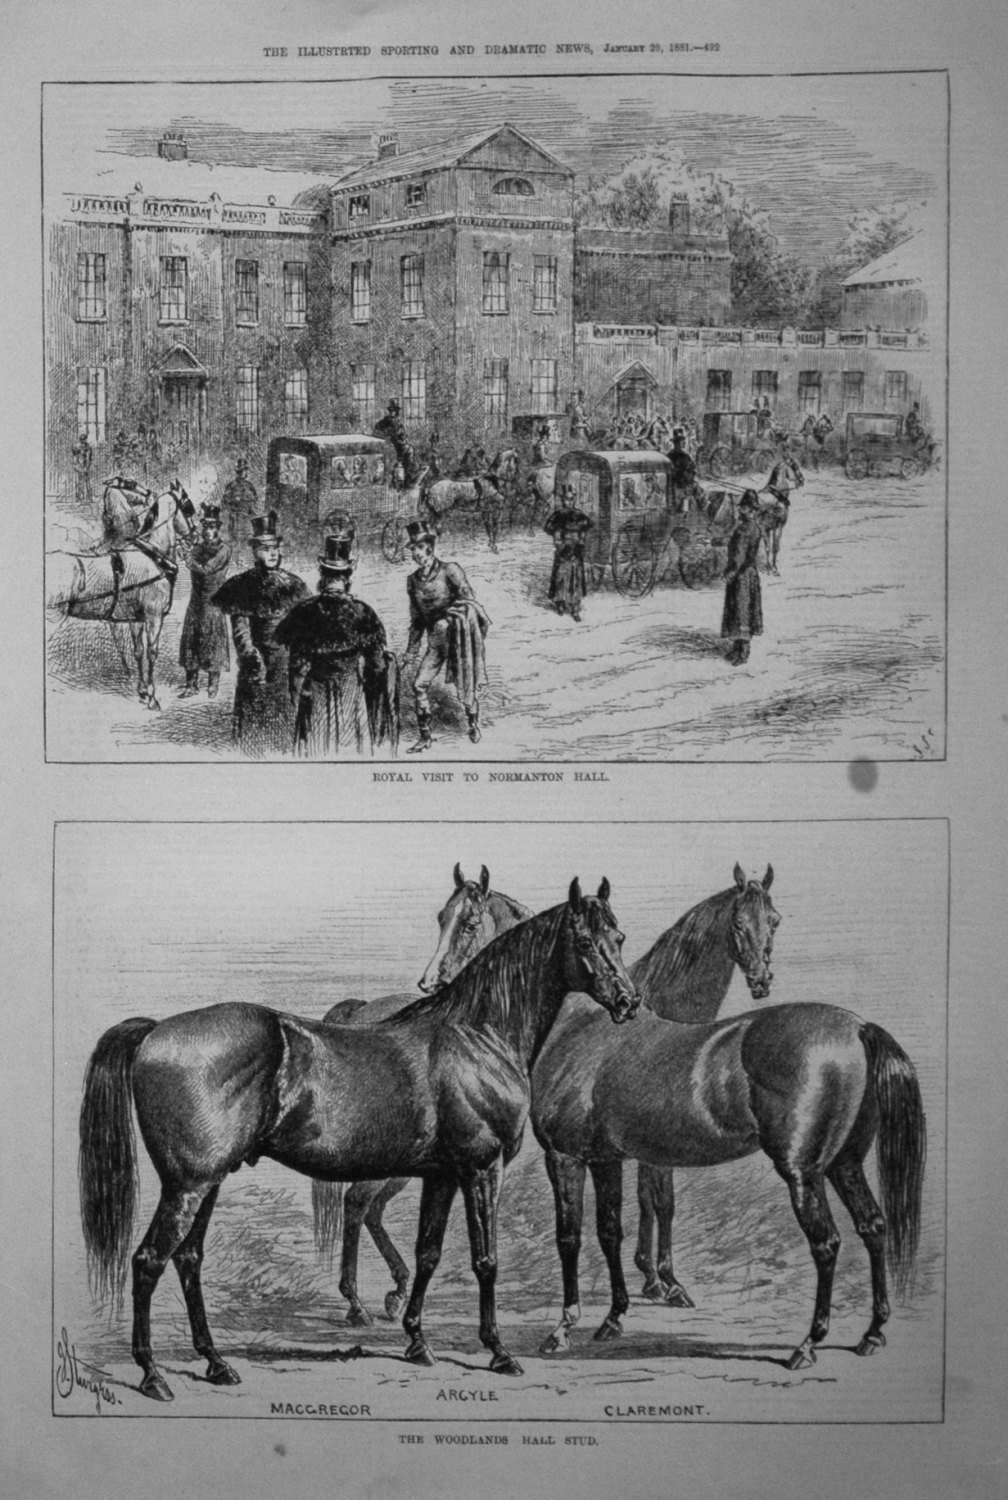 Royal Visit to Normanton Hall. 1881